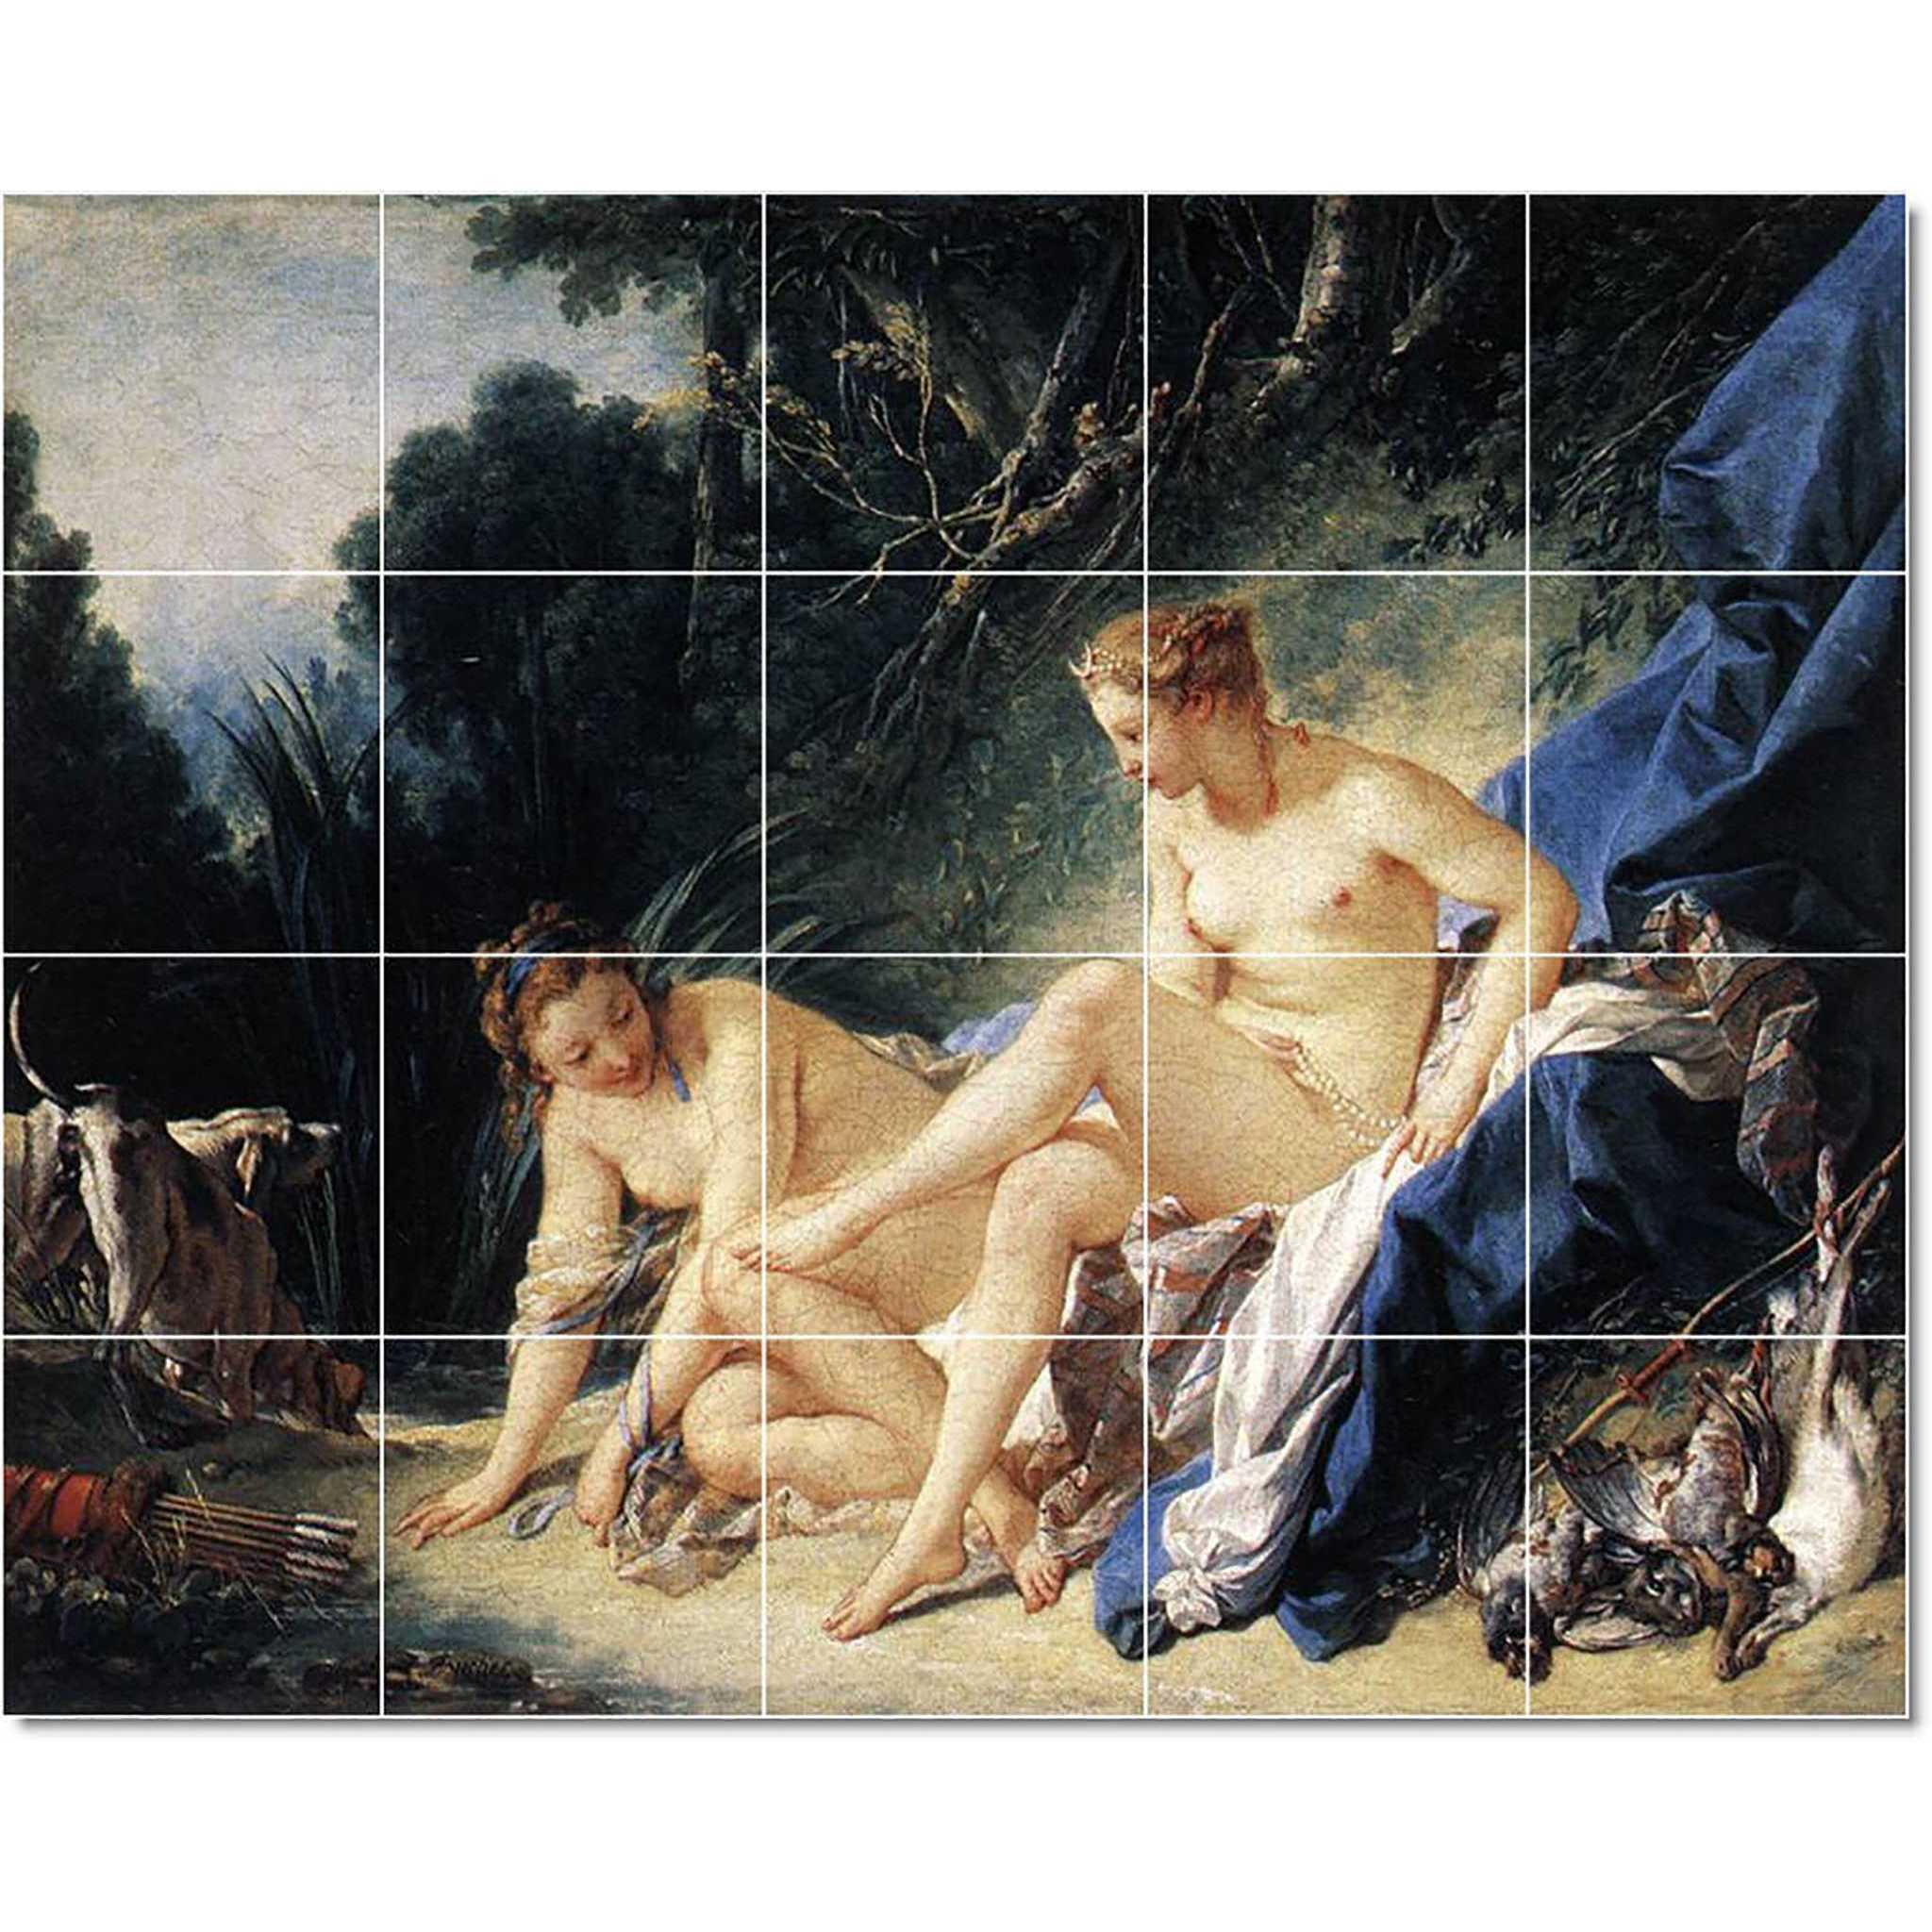 francois boucher nude painting ceramic tile mural p22143